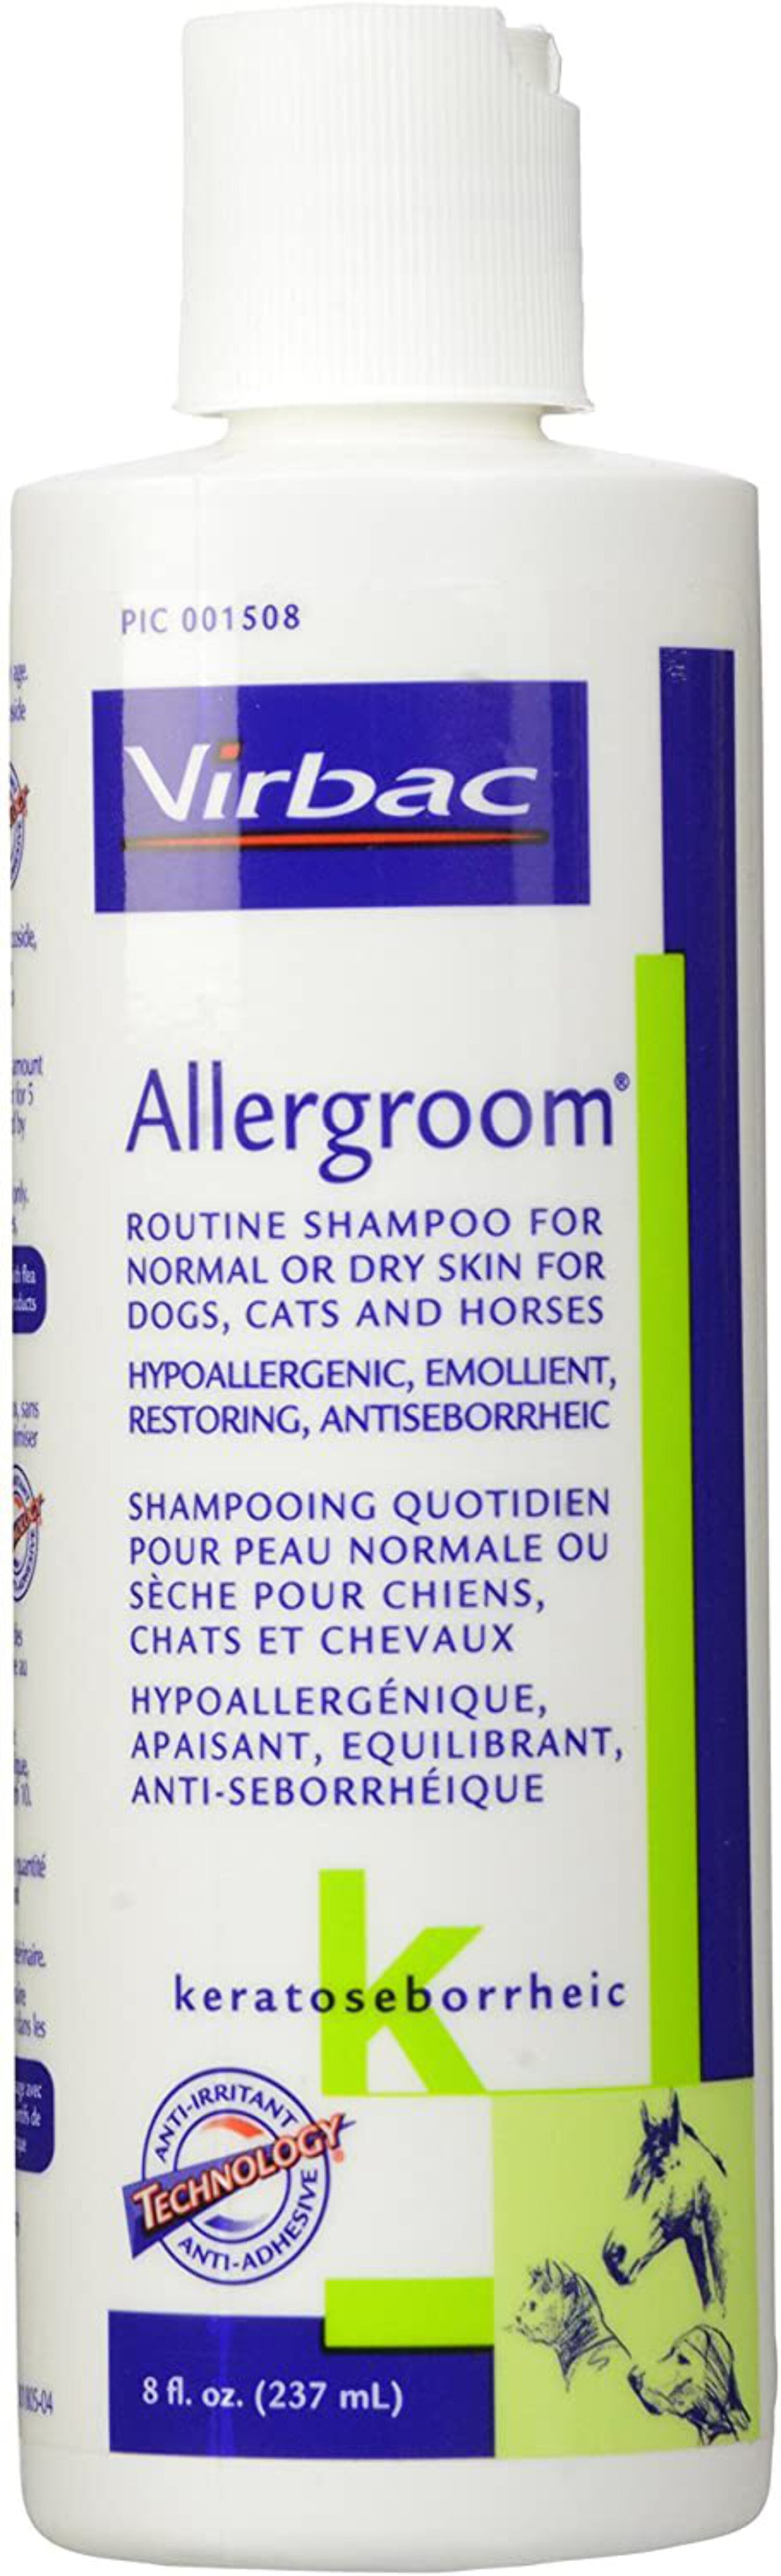 Allergroom Shampoo for Dogs Cats Horses 8 oz. - Walmart.com